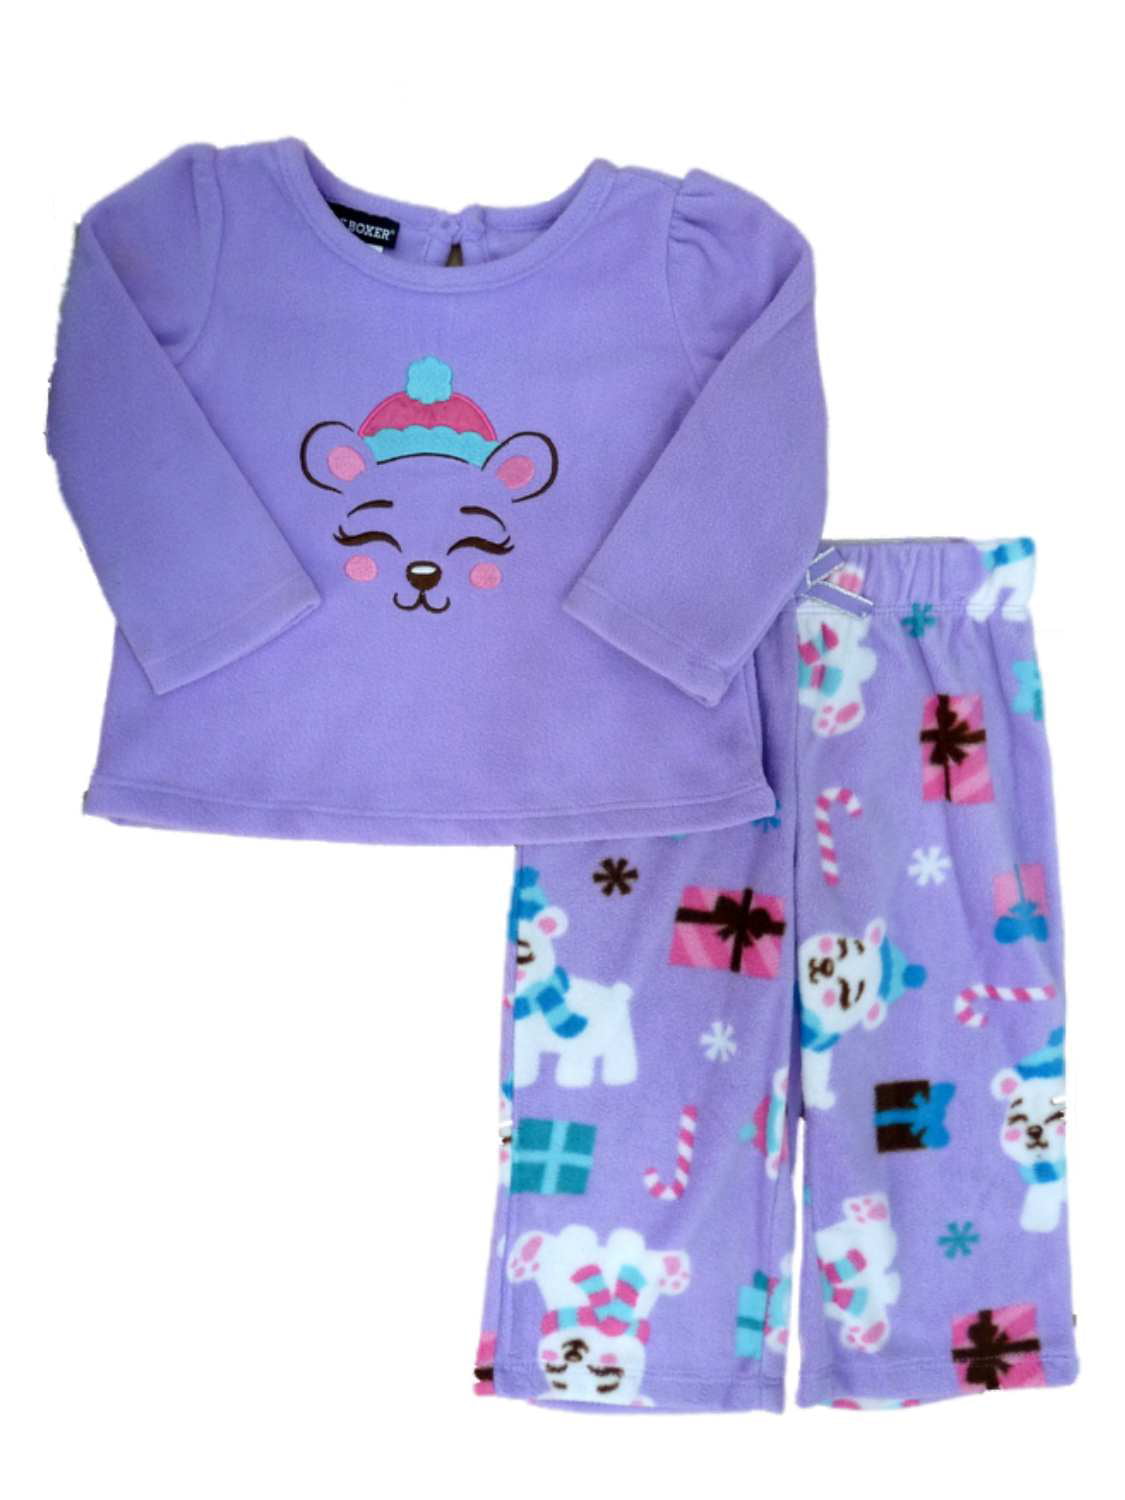 Joe Boxer Infant Toddler Girls Little Star Sleepwear Set Scottie Dog Pajama